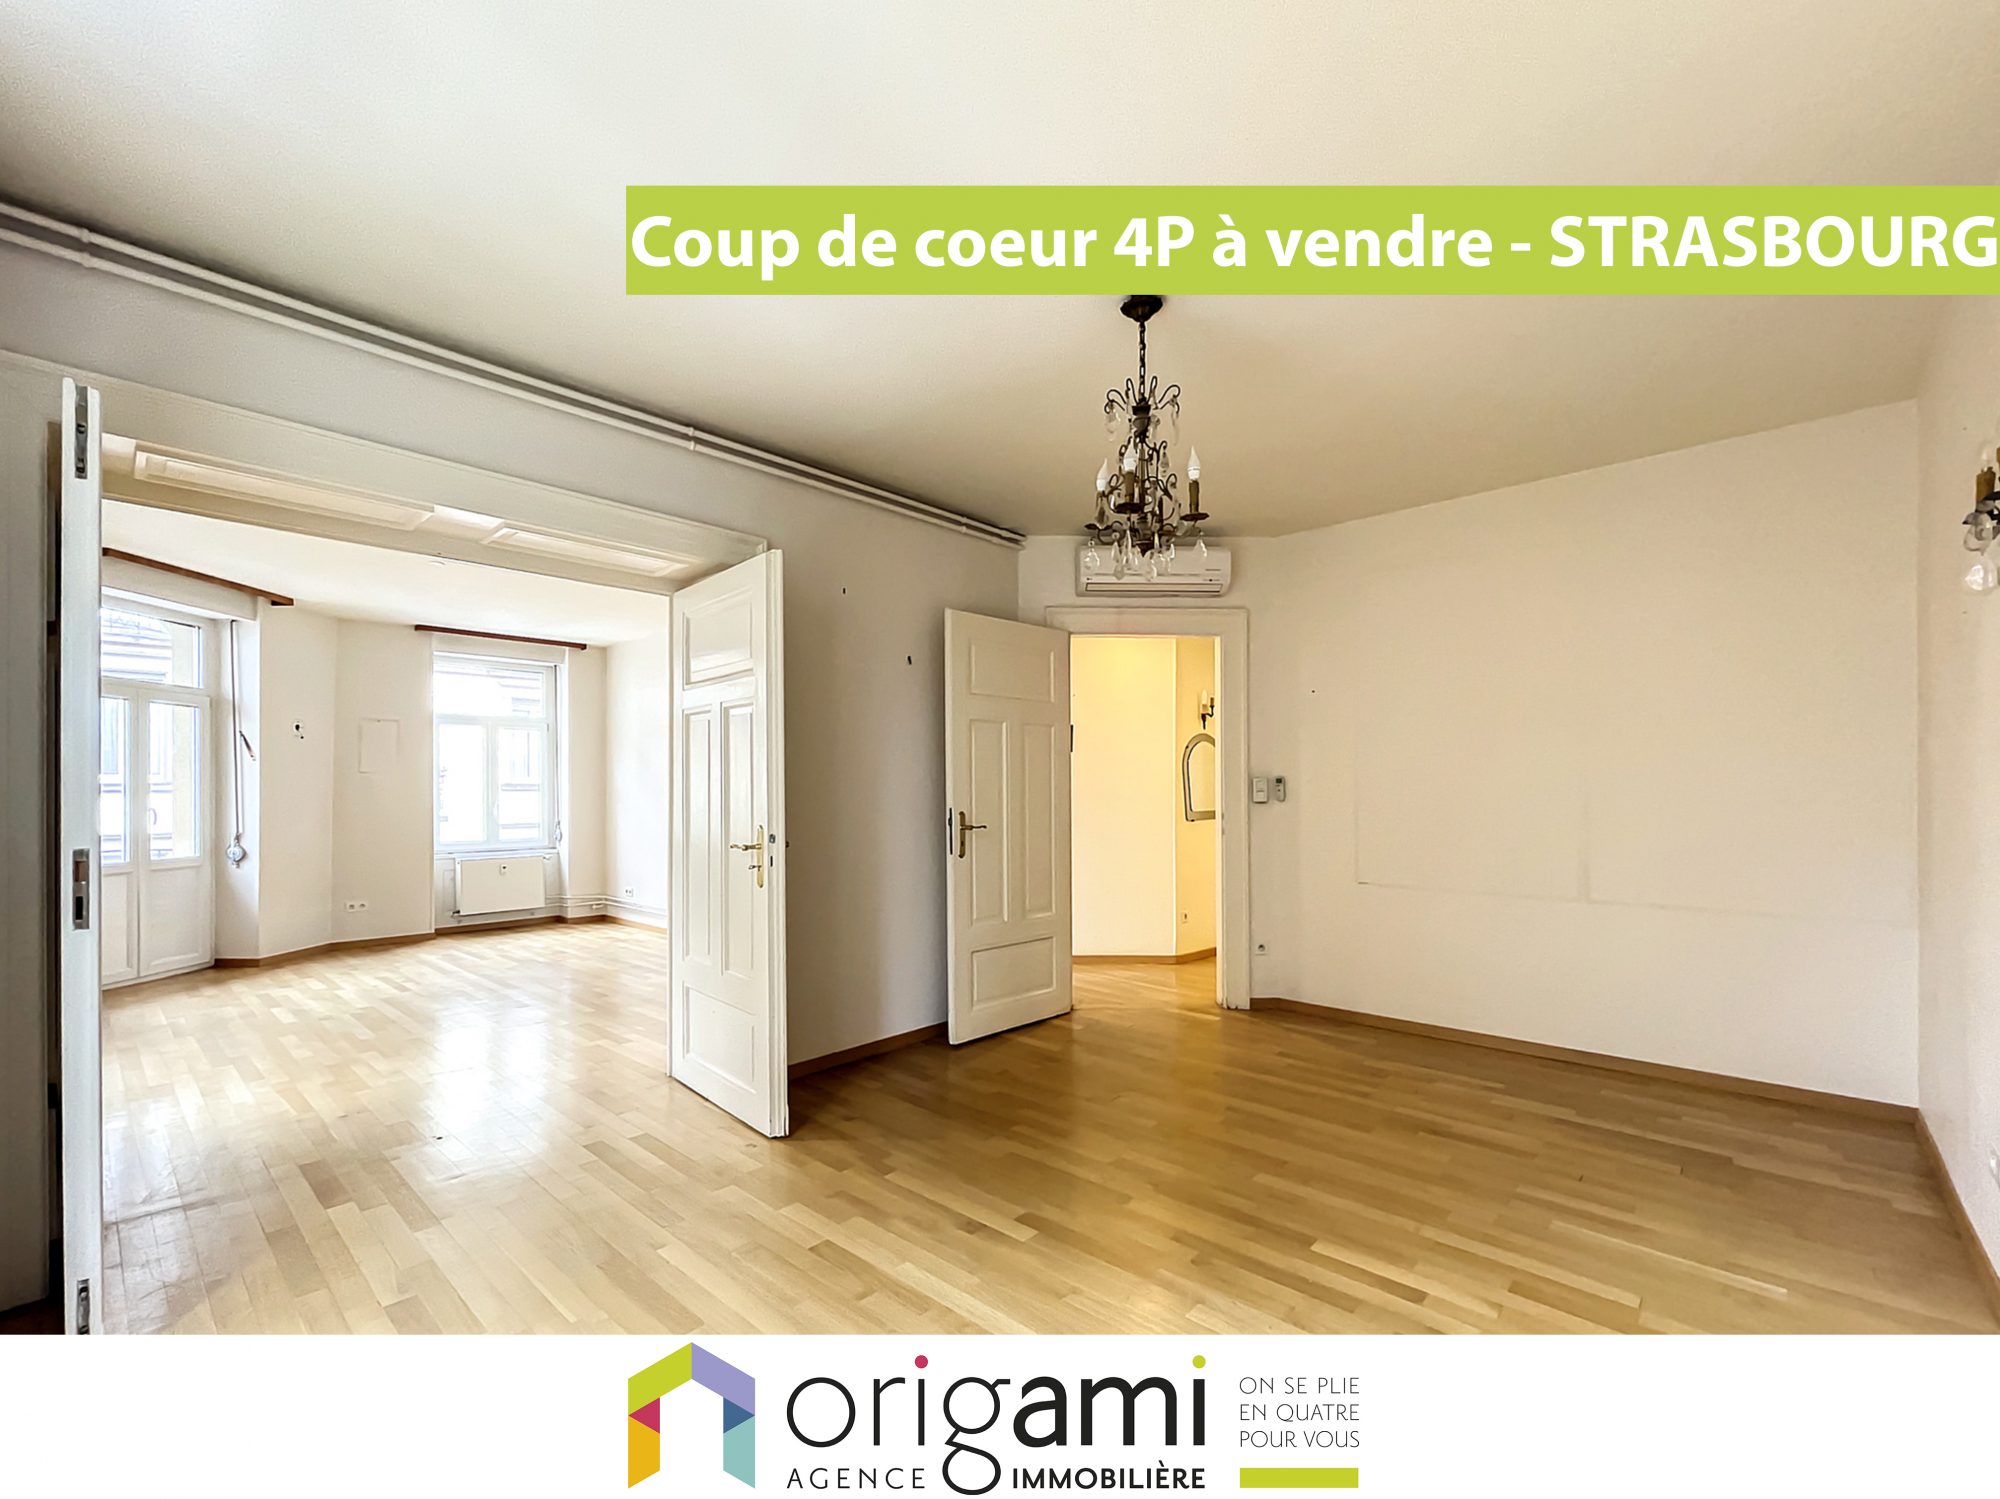 Vente Appartement 103m² 4 Pièces à Strasbourg (67000) - Origami